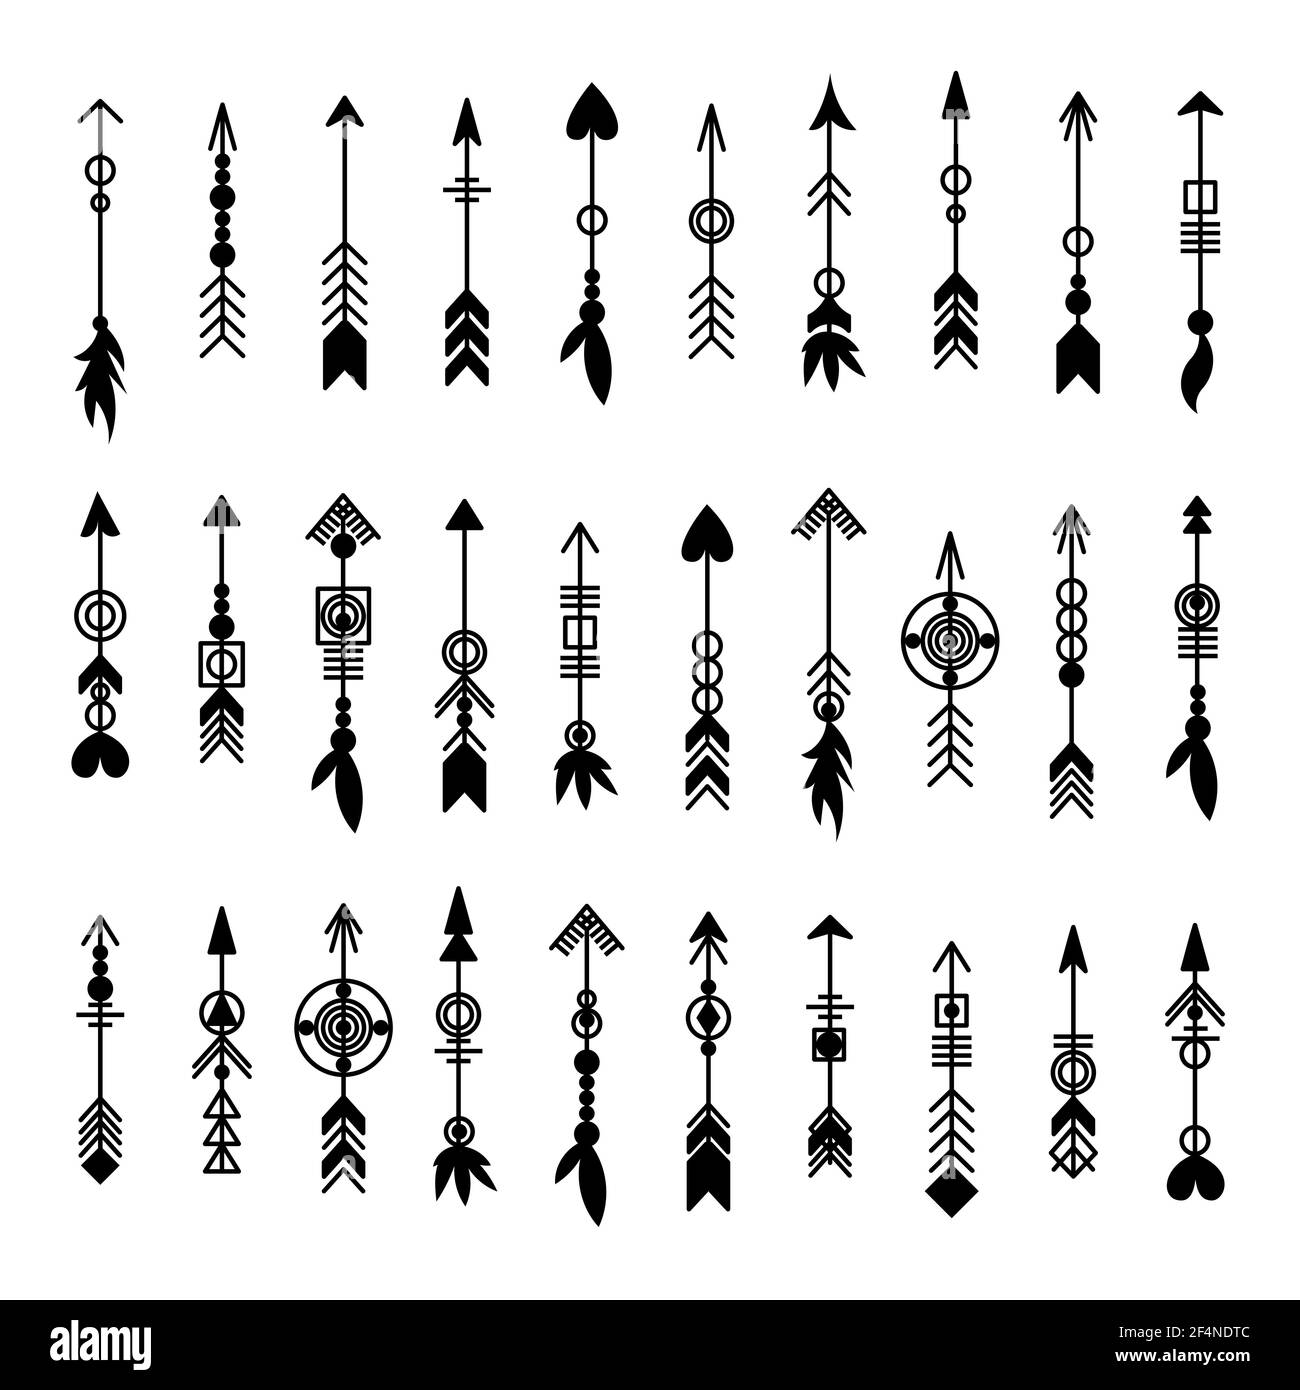 arrows tattoo design